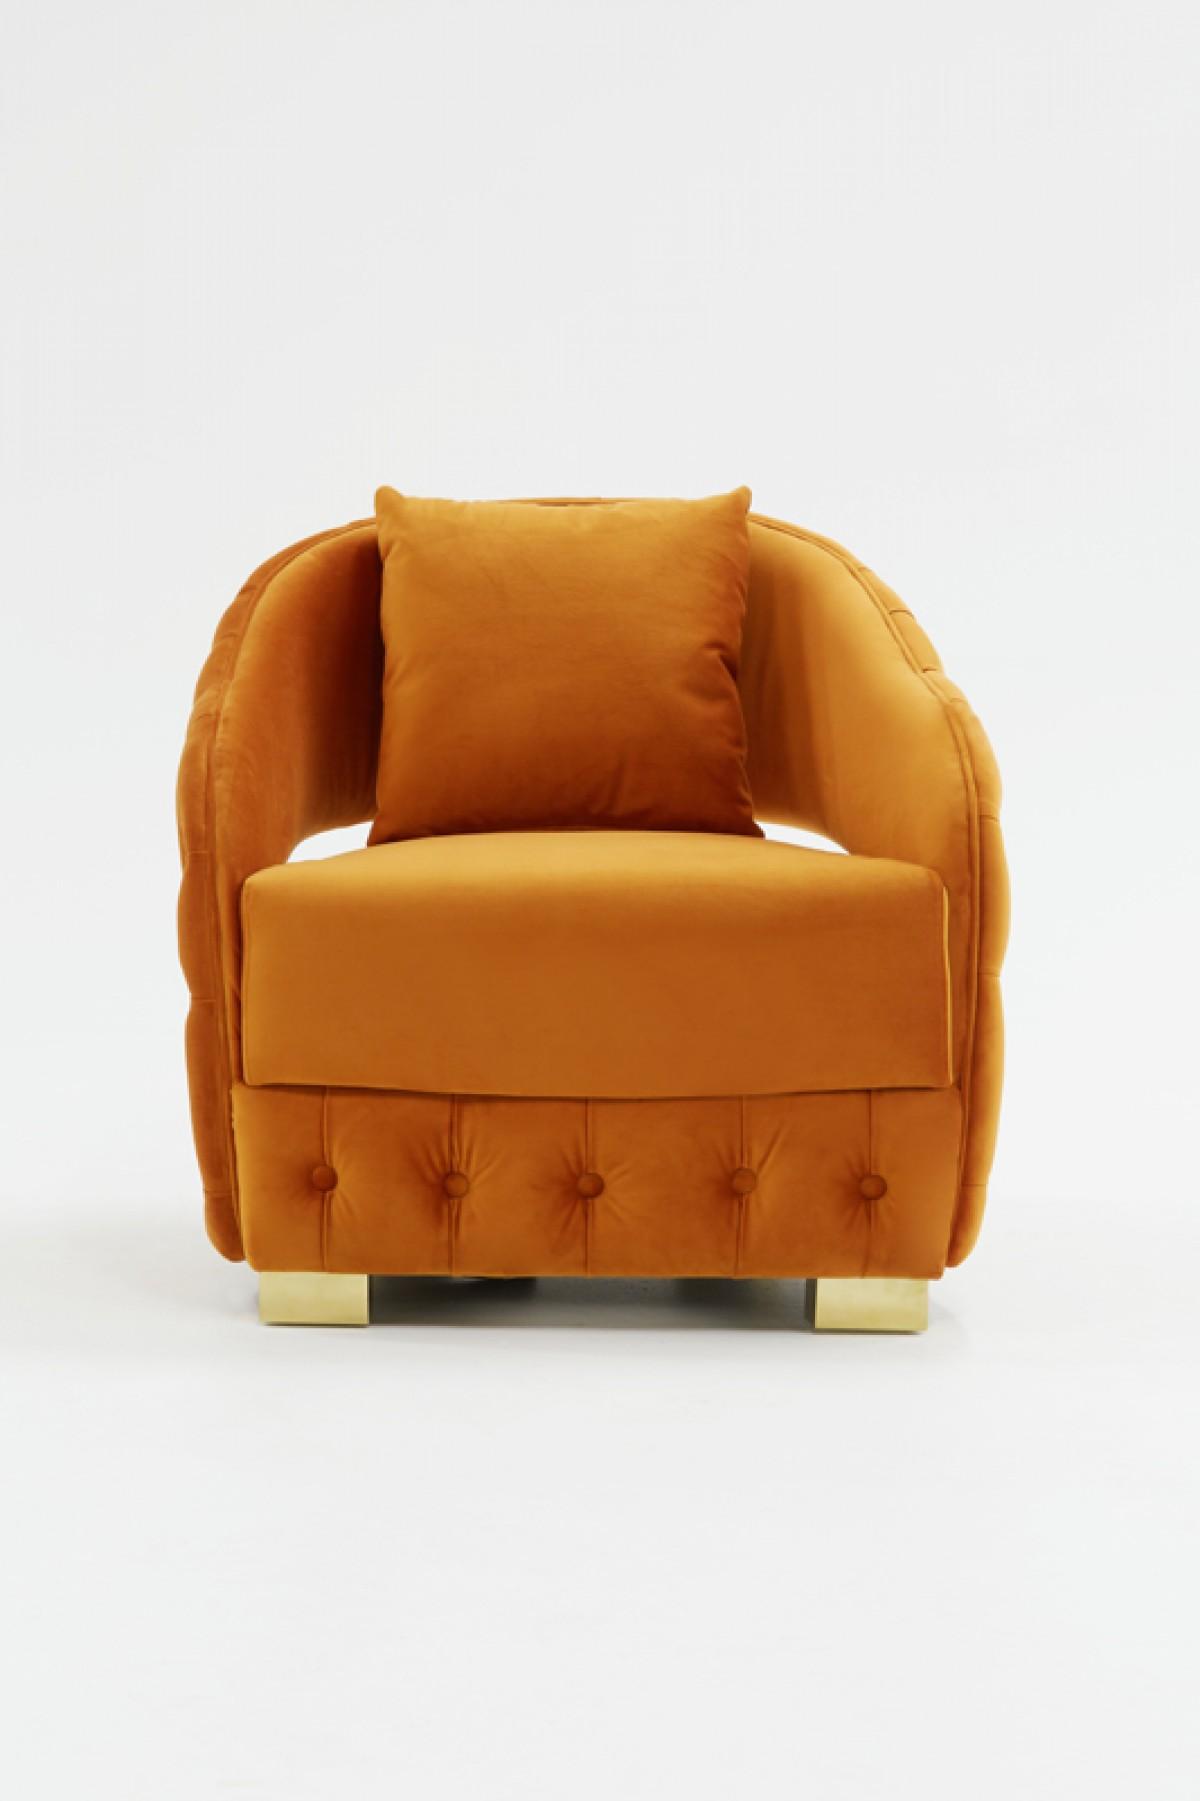 Contemporary, Modern Accent Chair Divani Casa Duarte VGYUHD-1830-ORG in Orange, Gold Fabric